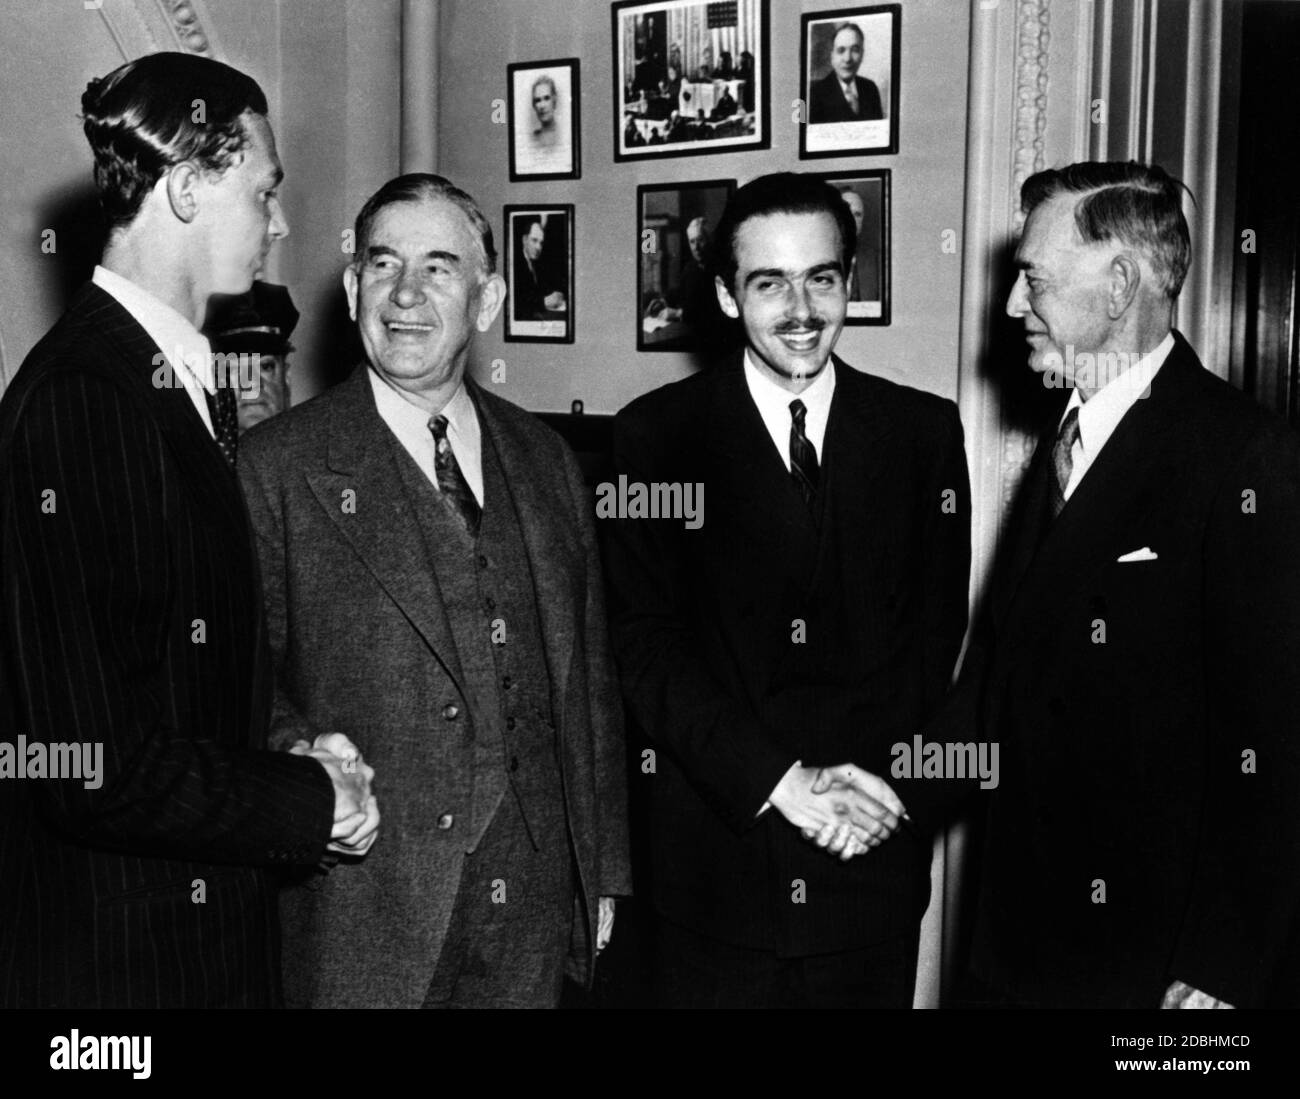 Felix von Habsburg, Senator Alben W. Barkley, Otto von Habsburg and Senator Key Wittman (from left) during a visit of the two Austrians to the Capitol in Washington. Stock Photo